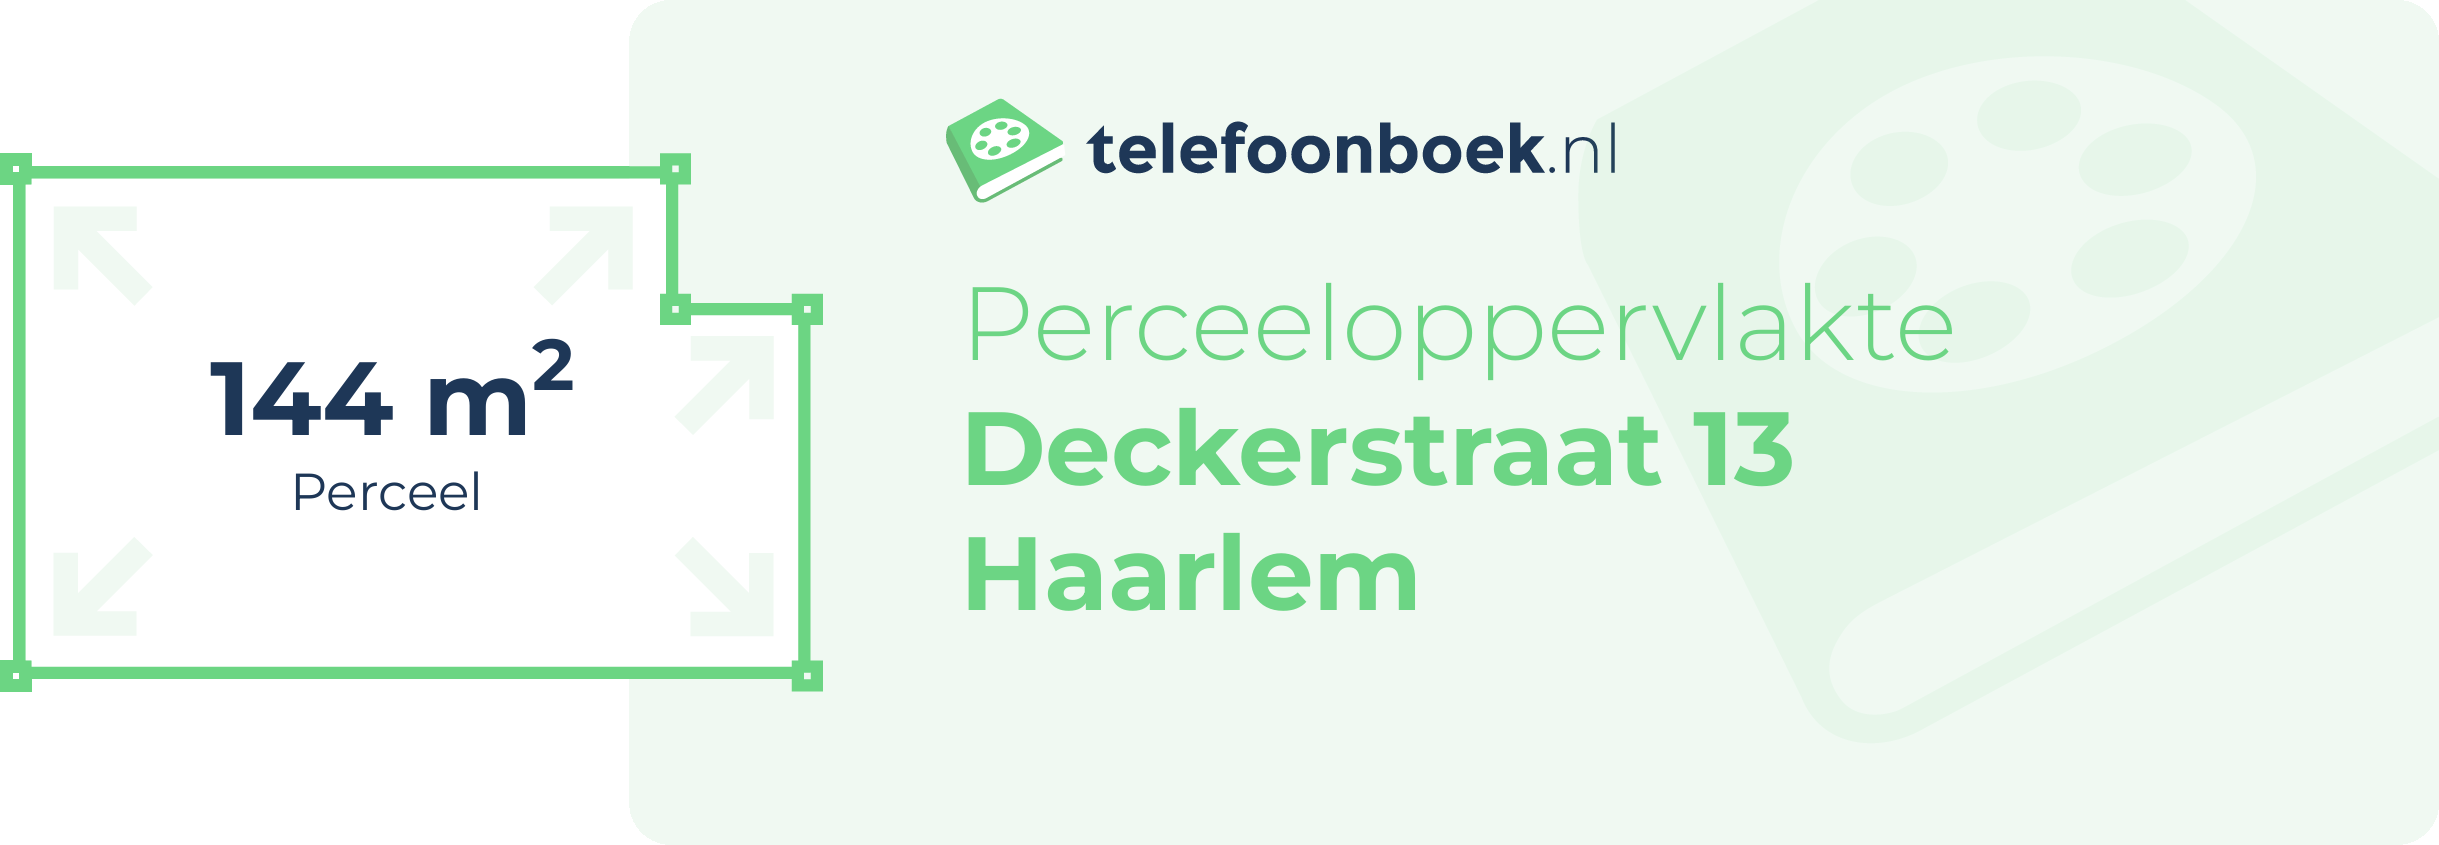 Perceeloppervlakte Deckerstraat 13 Haarlem